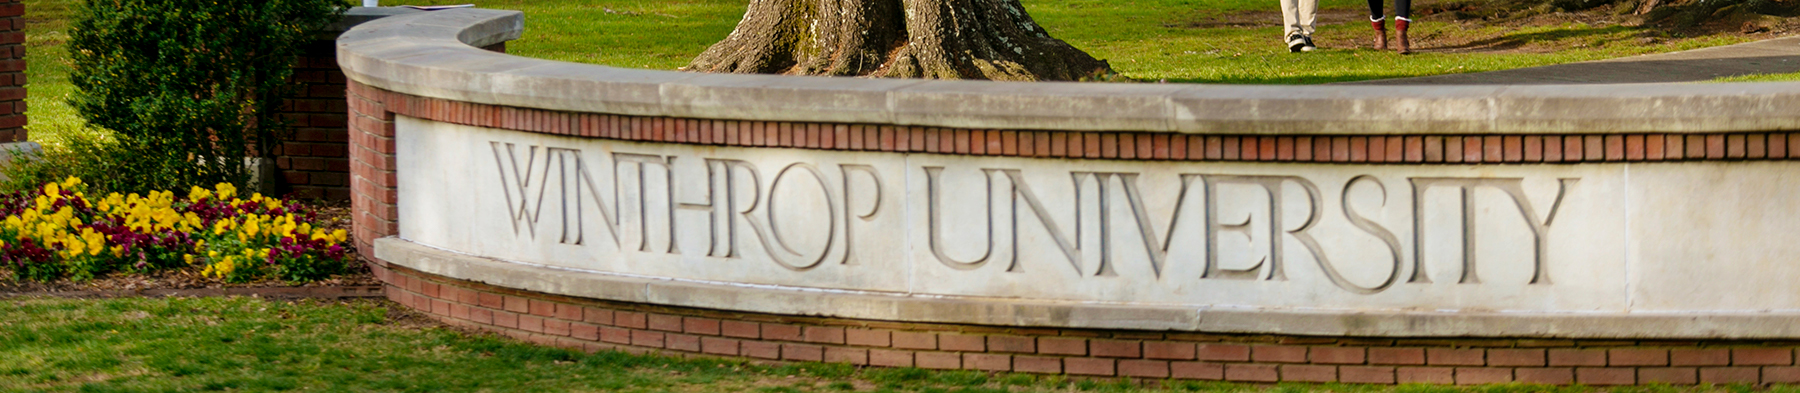 Winthrop University - Entrance